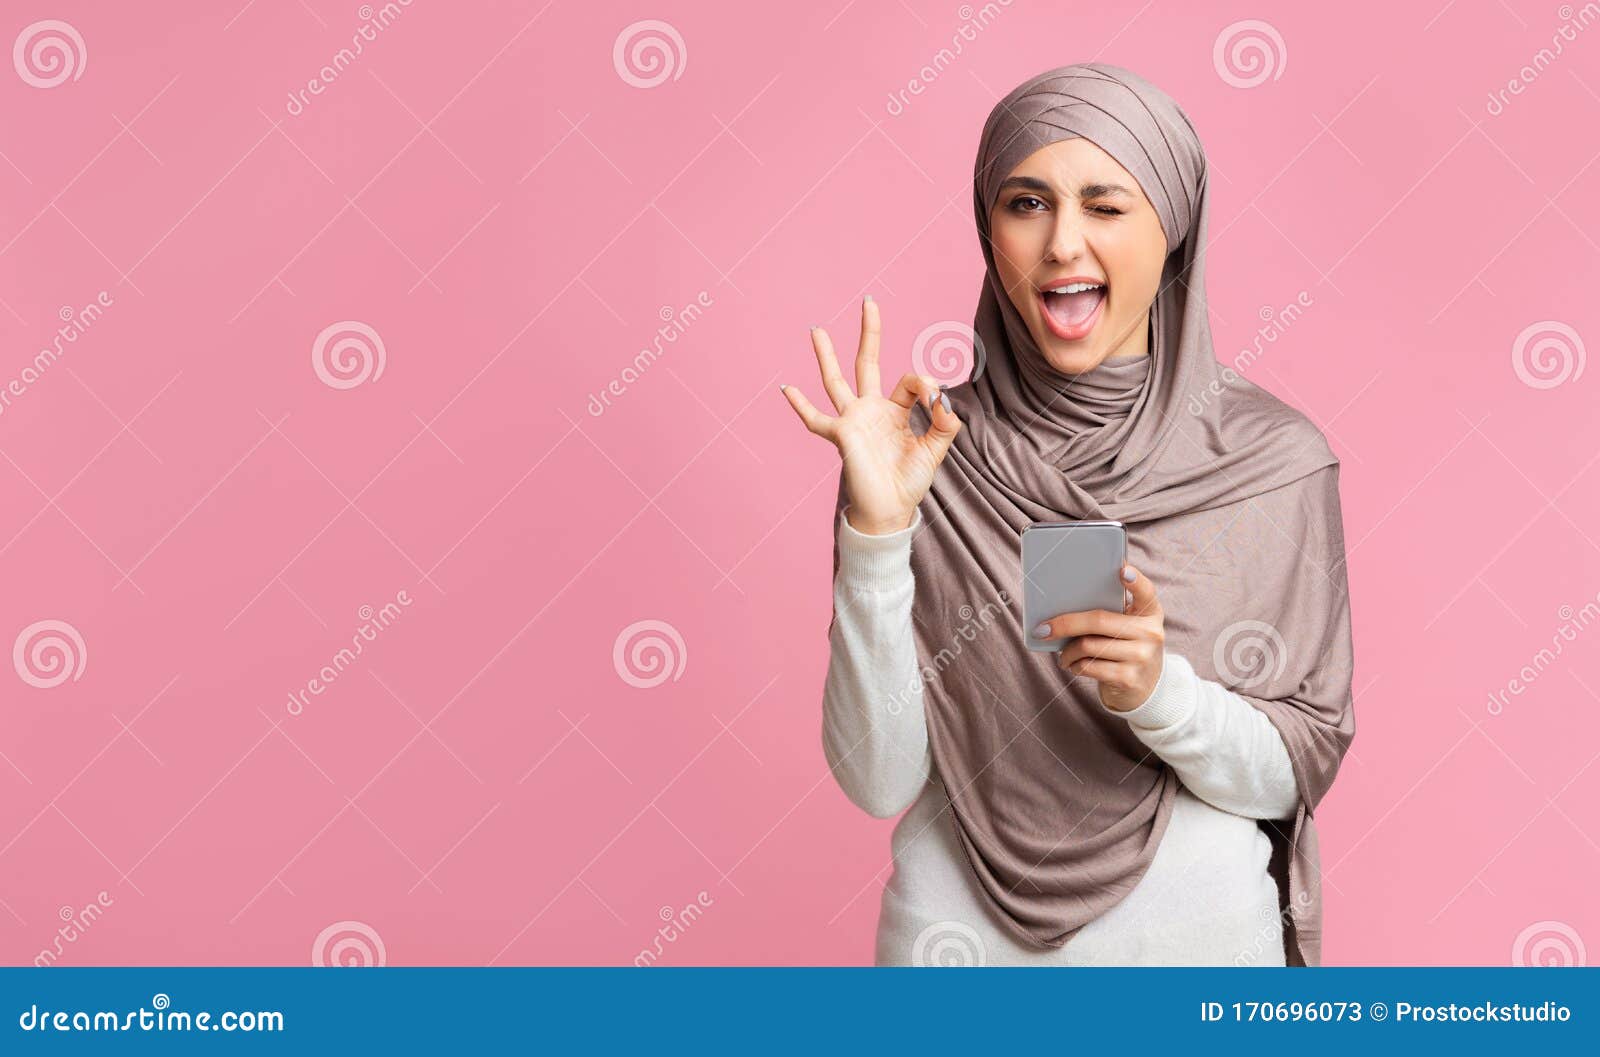 arabic-woman-hijab-using-smartphone-winking-showing-ok-gesture-cool-islamic-app-positive-muslim-girl-hijab-winking-170696073.jpg